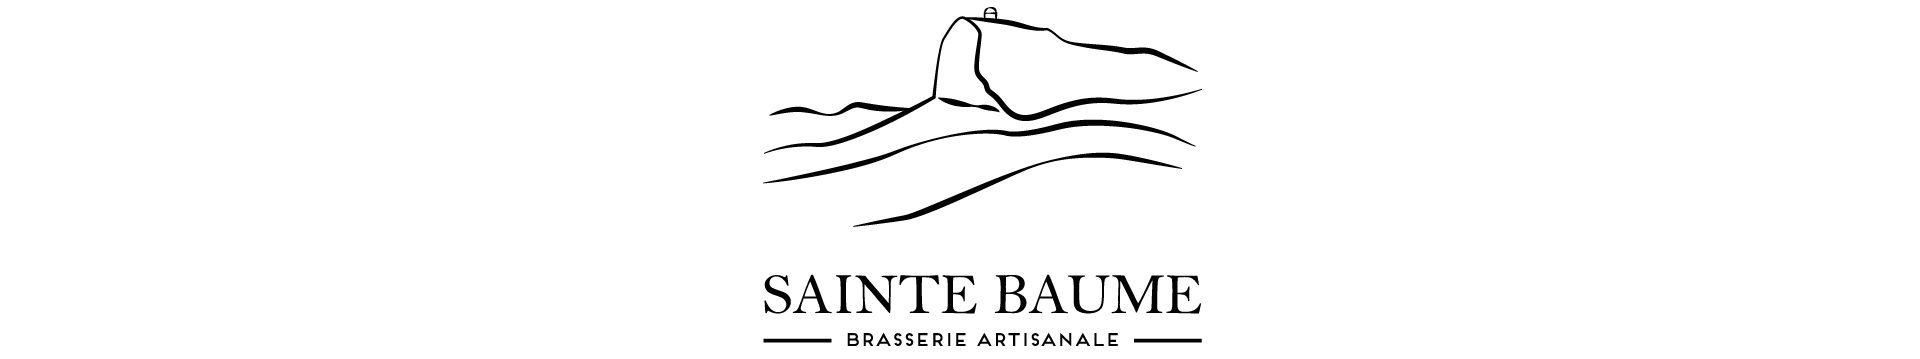 Brasserie de la Sainte Baume